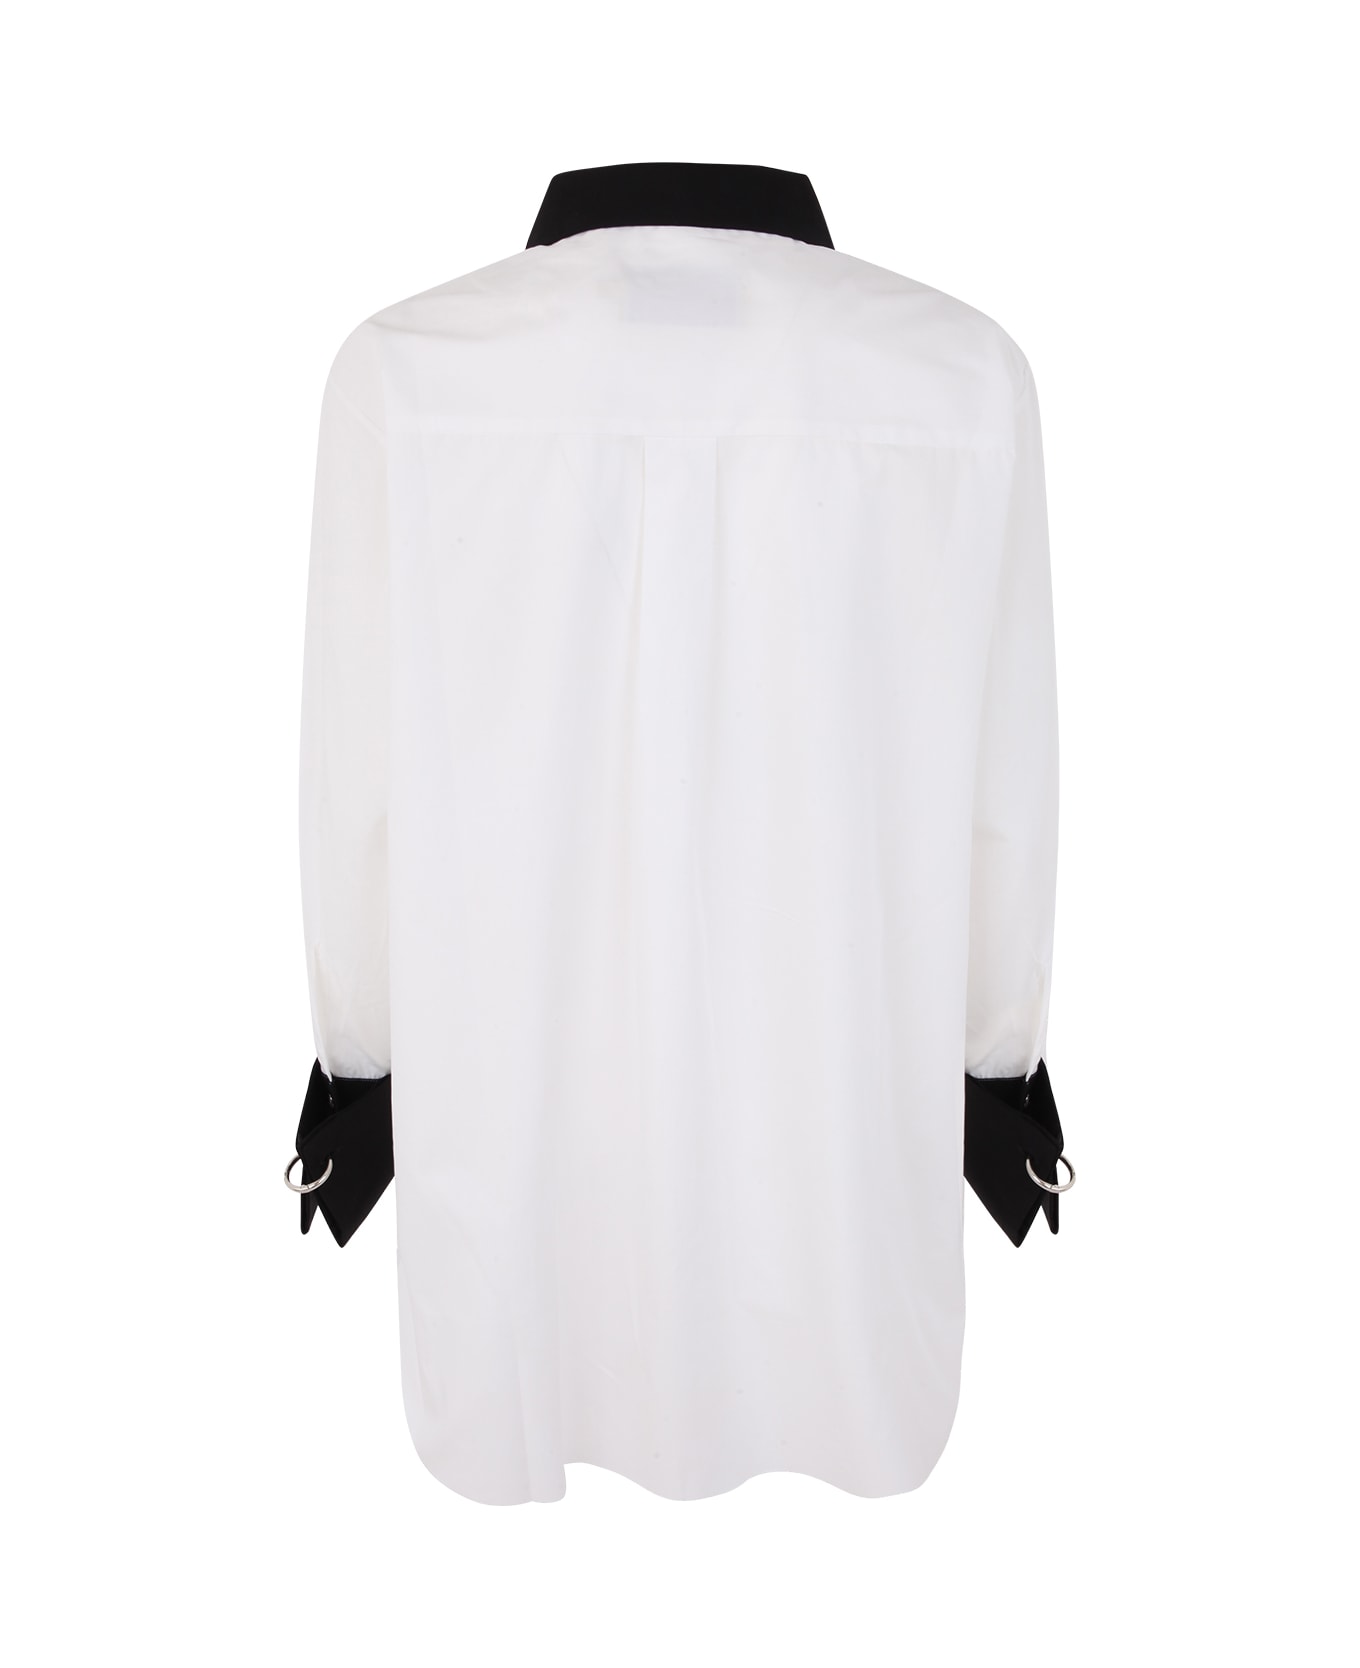 Marques'Almeida Shirt With Detachable Cuffs And Collar - Black/white